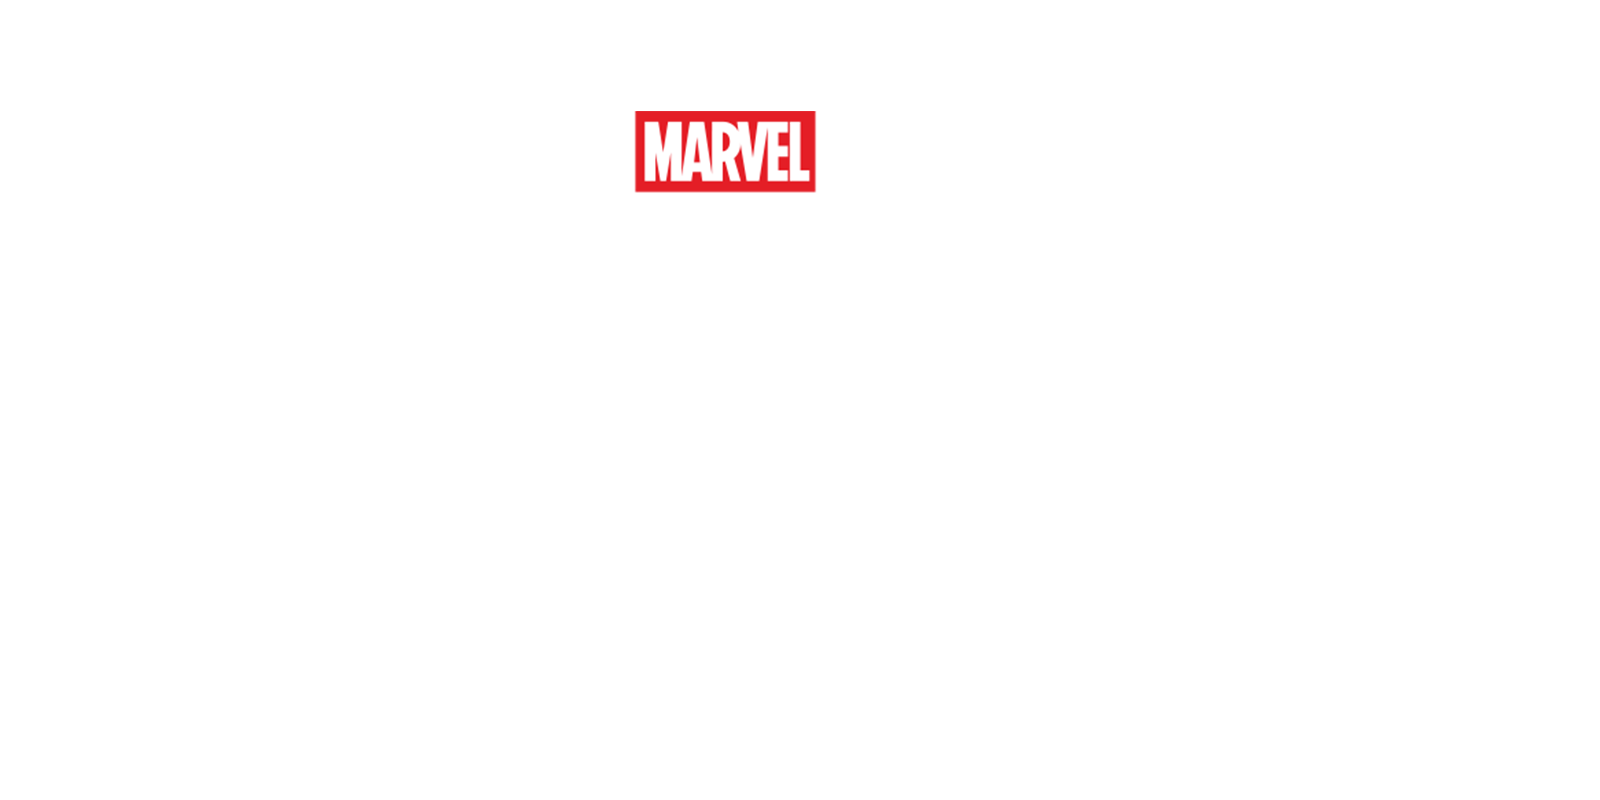 avengers age of ultron free movie online watch hd